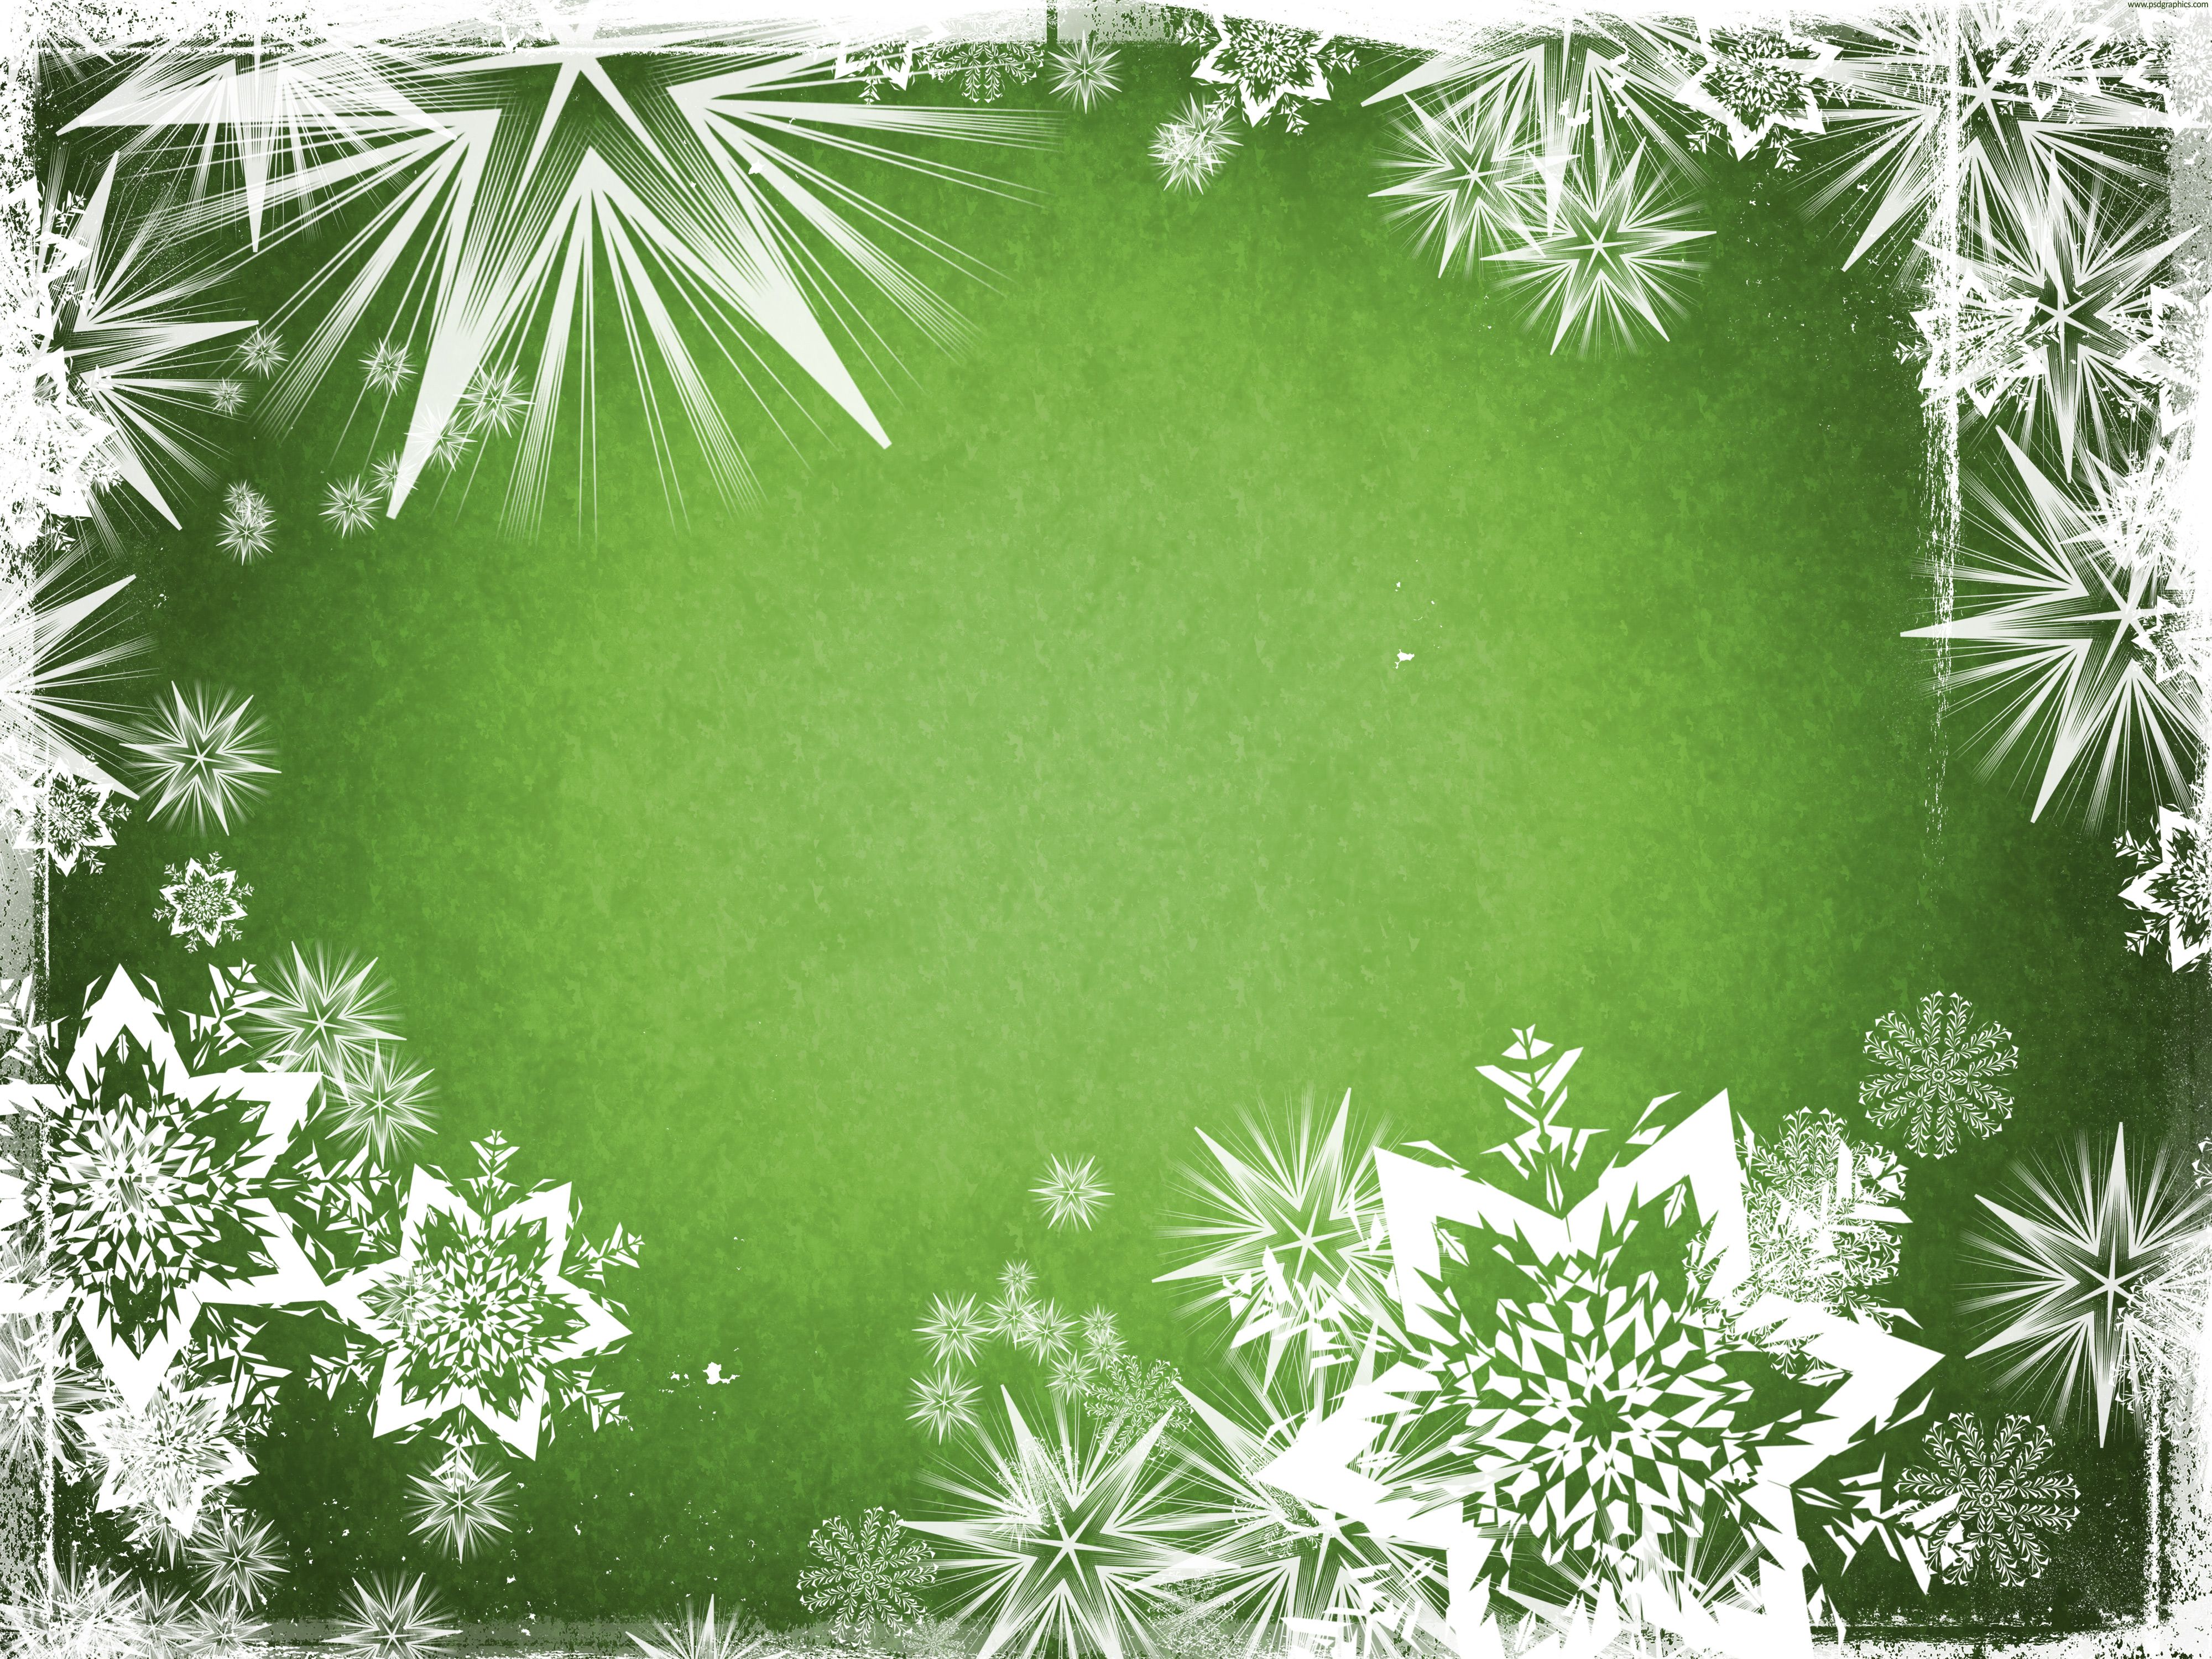 Xmas card ideas on Pinterest Christmas Background, Backgrounds